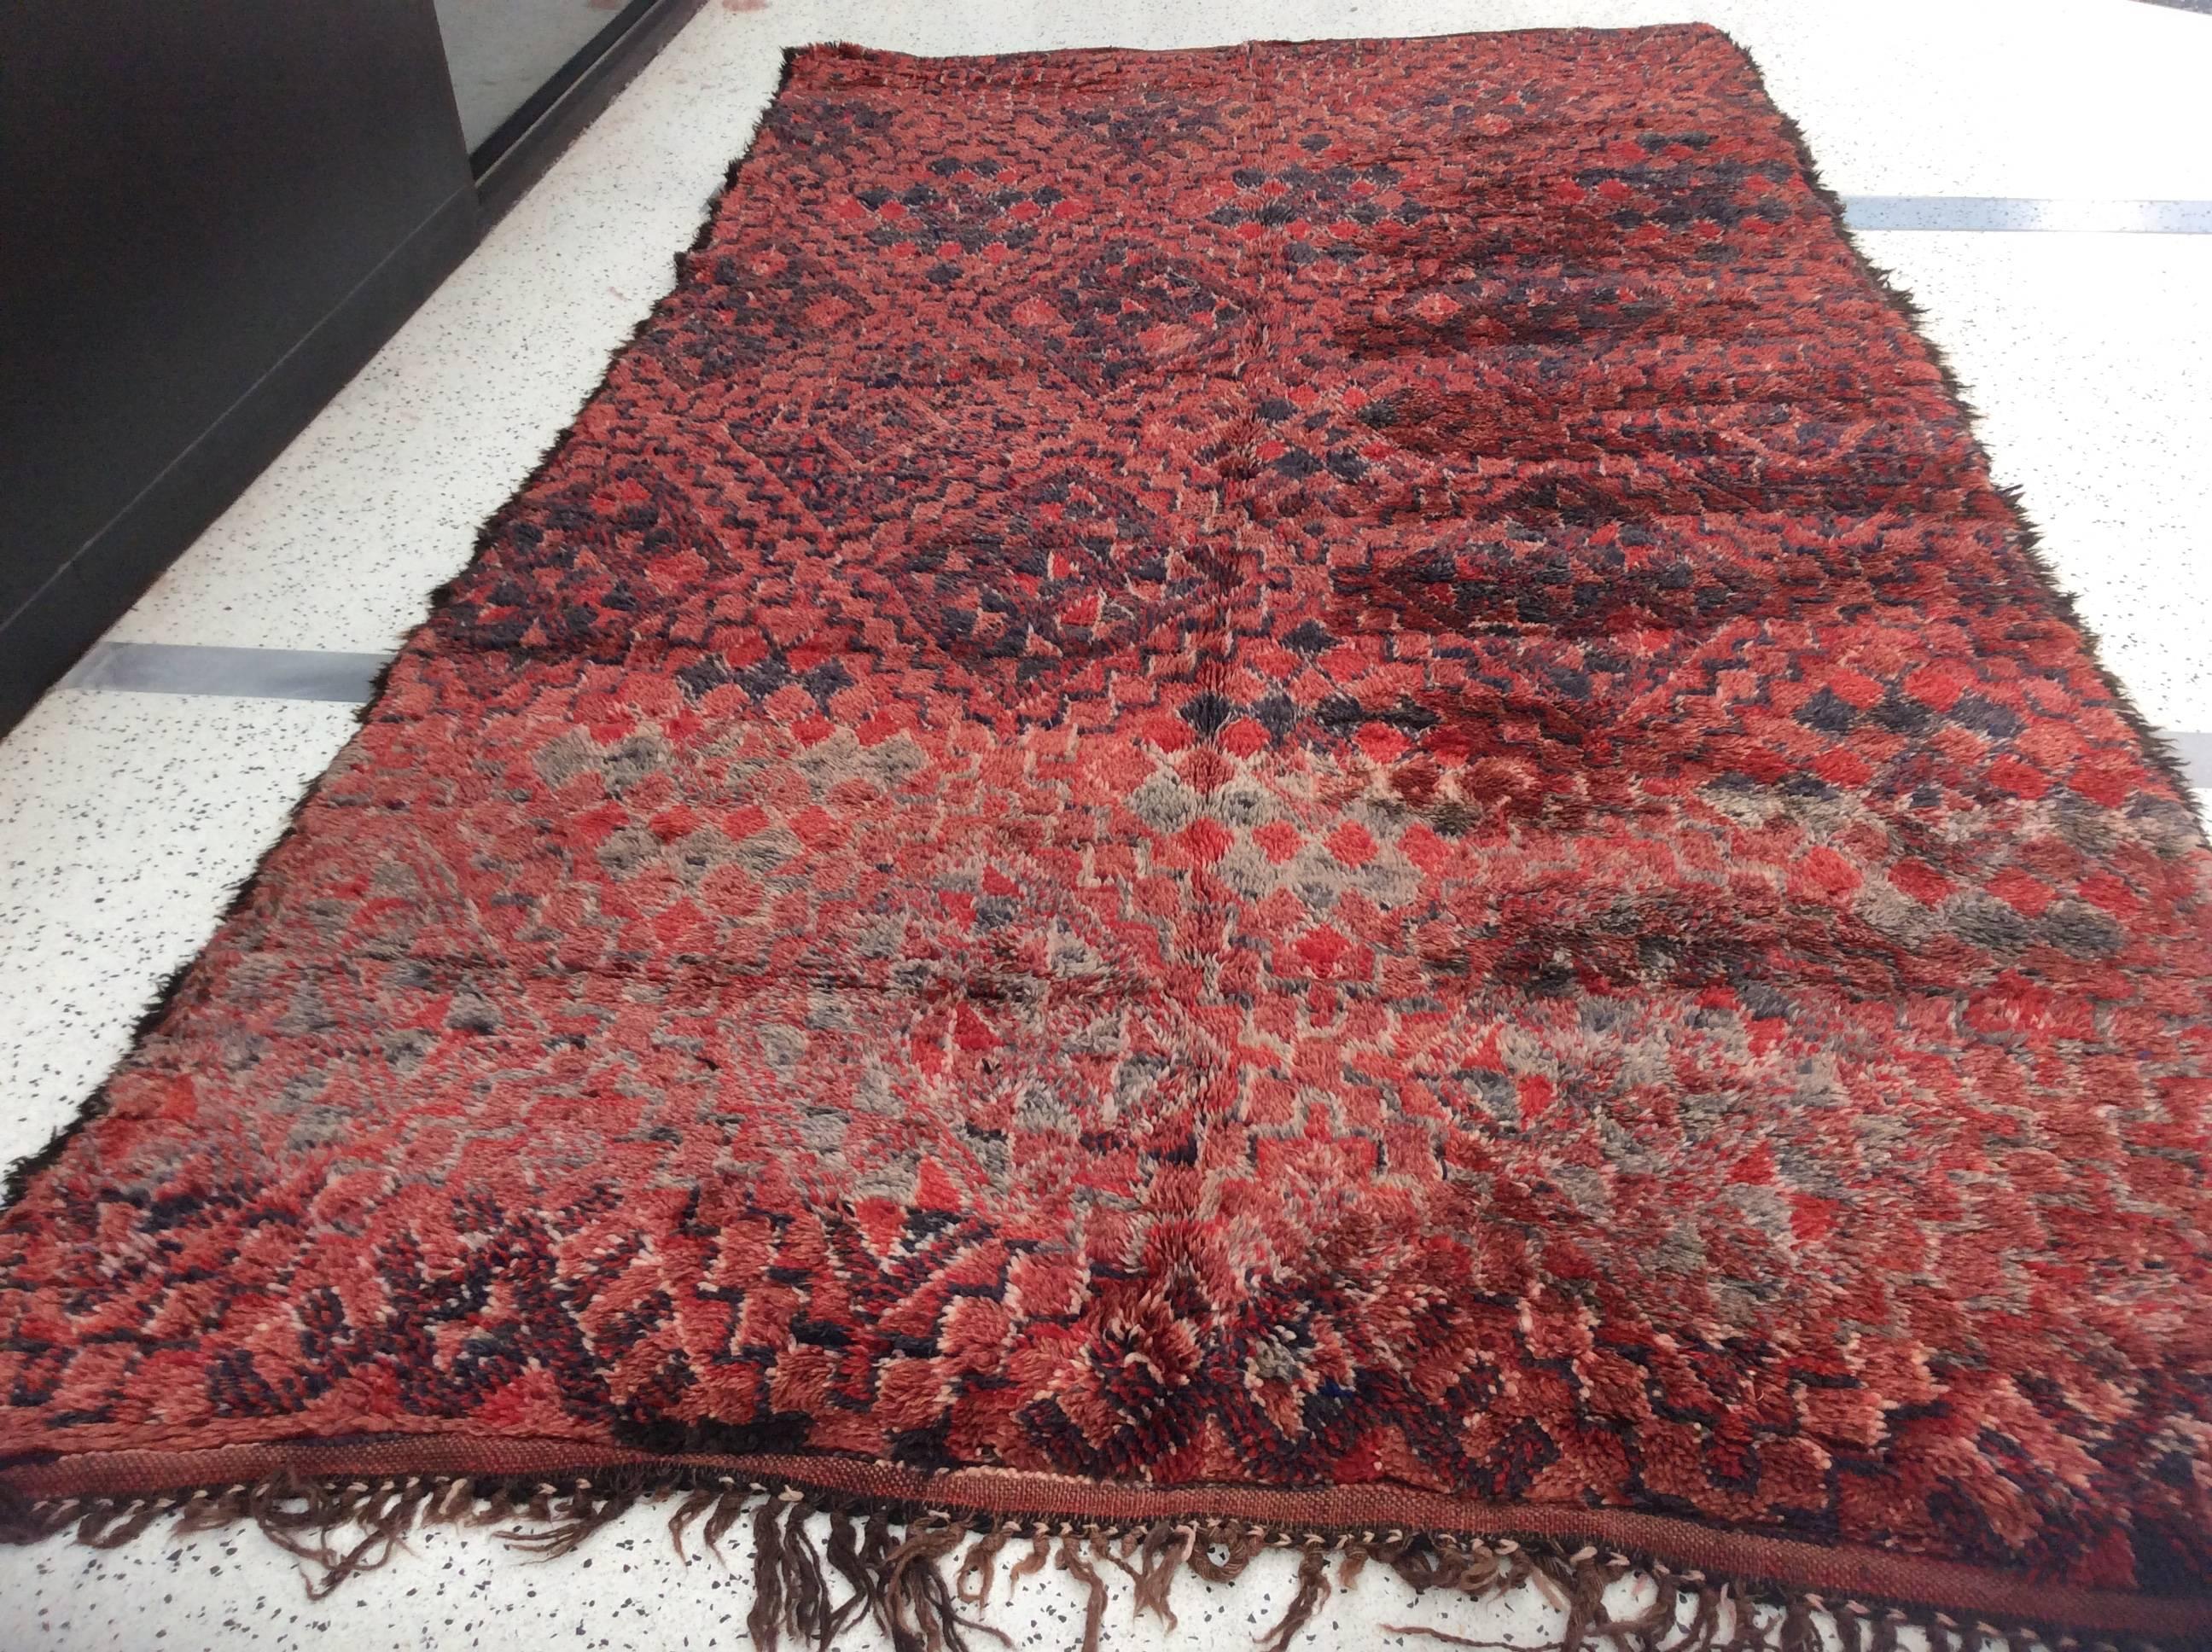 Tribal Moroccan rug.